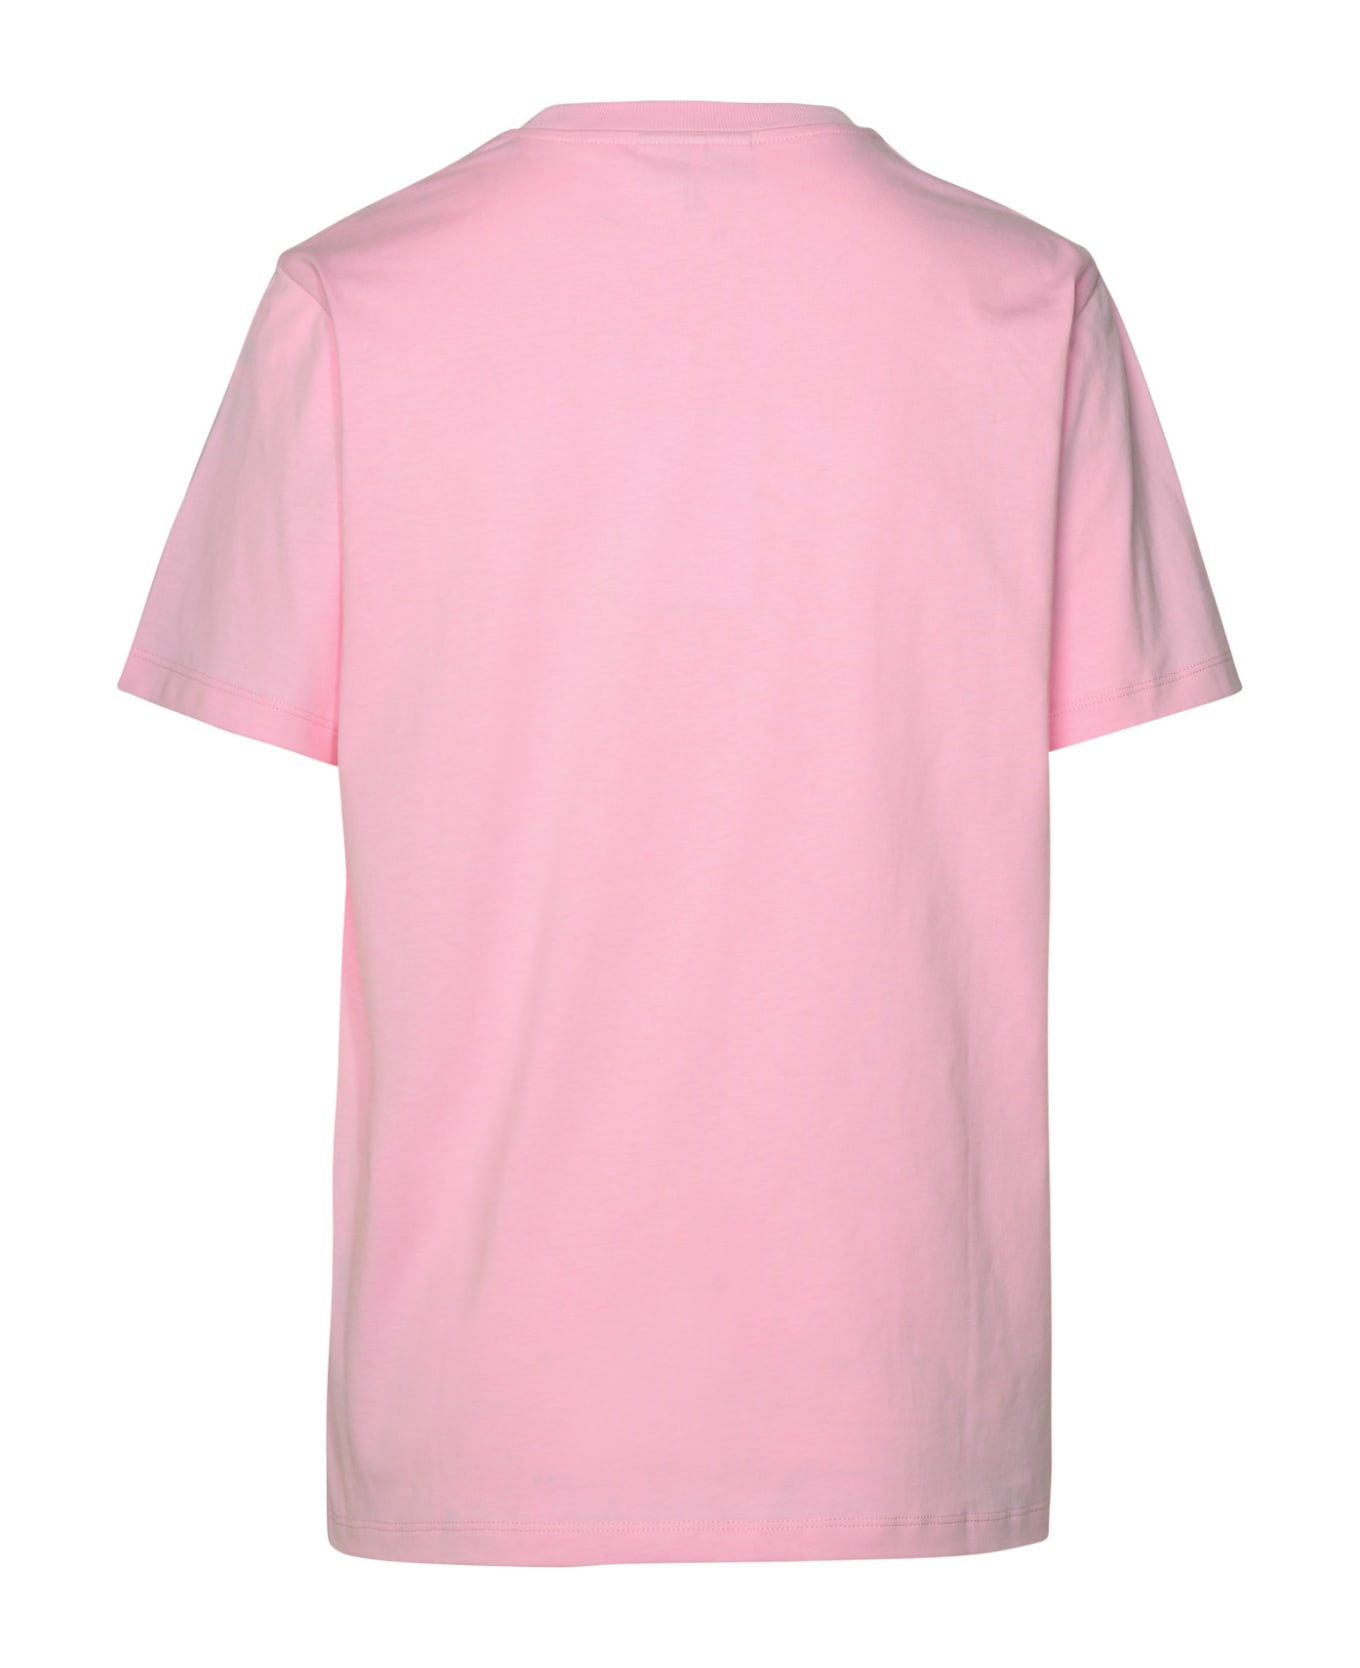 Ganni Pink Cotton T-shirt - PINK